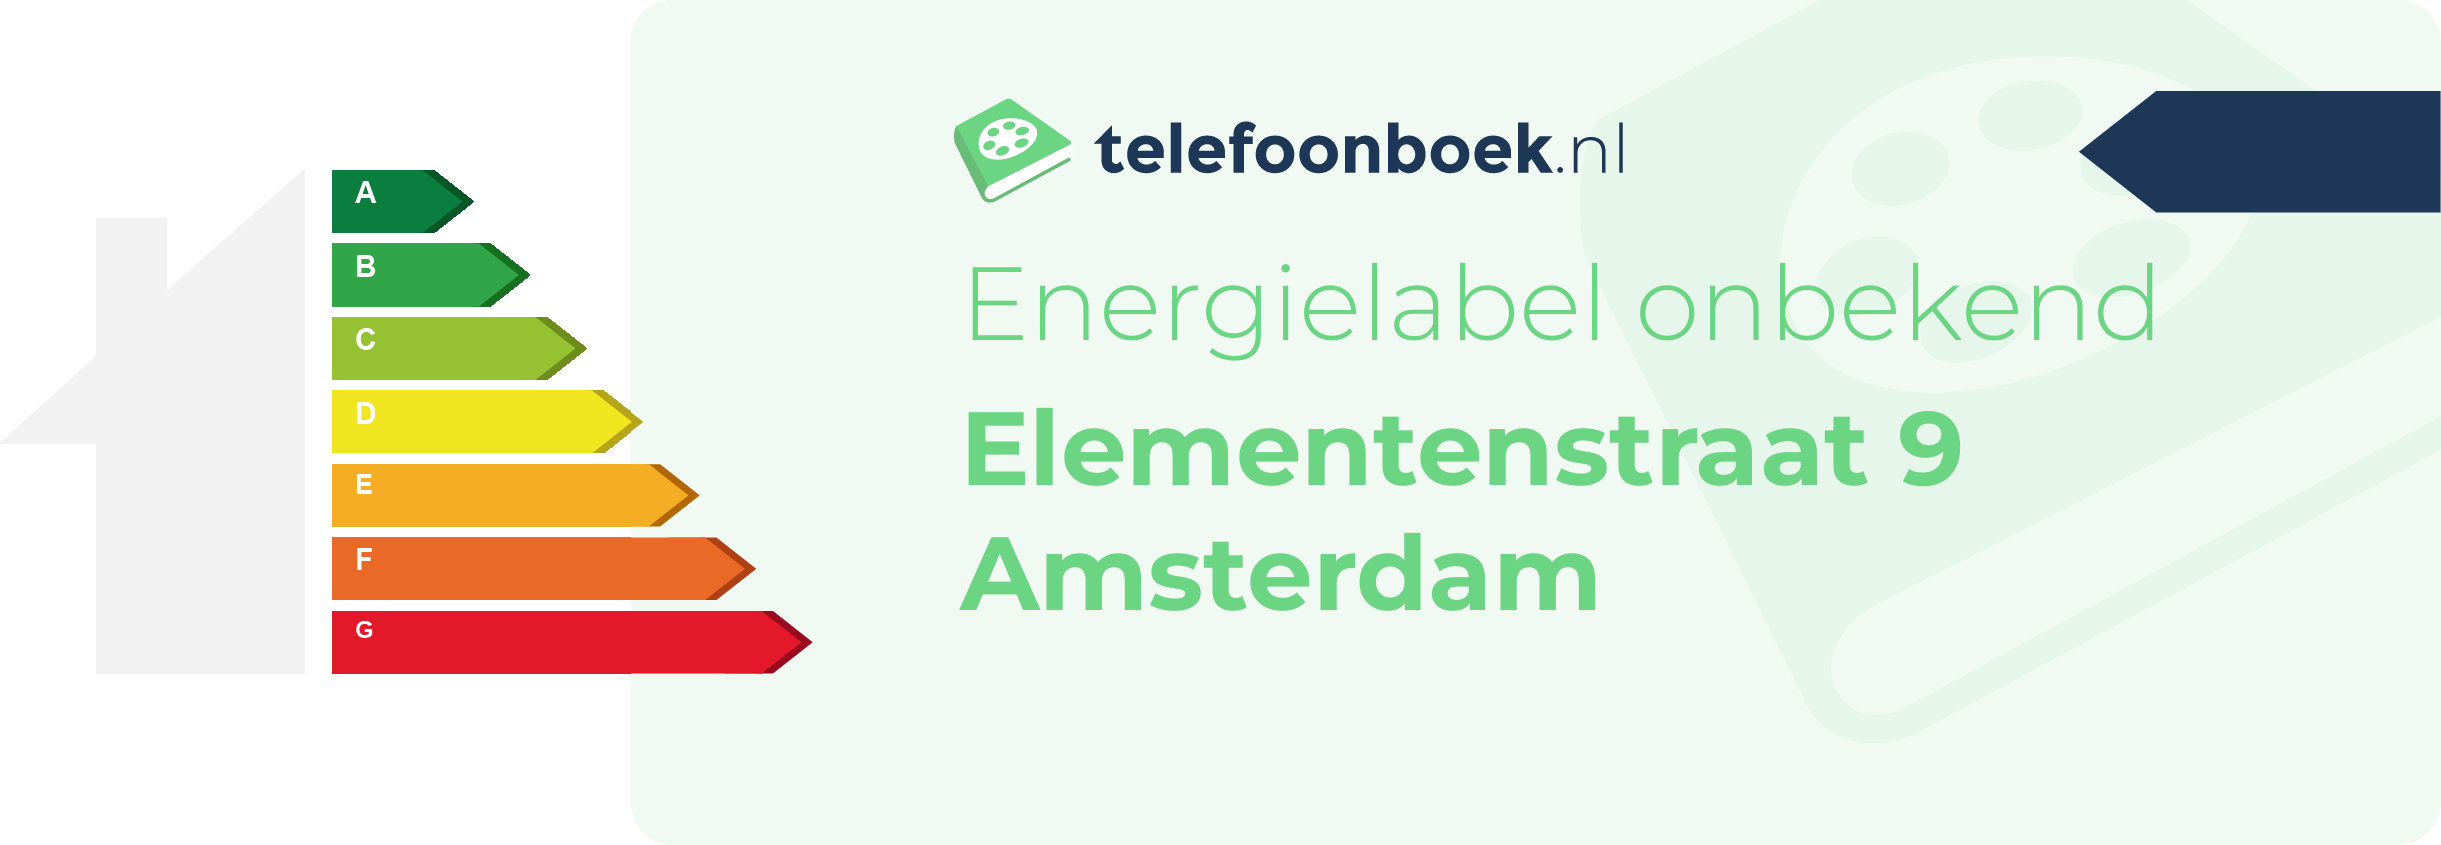 Energielabel Elementenstraat 9 Amsterdam